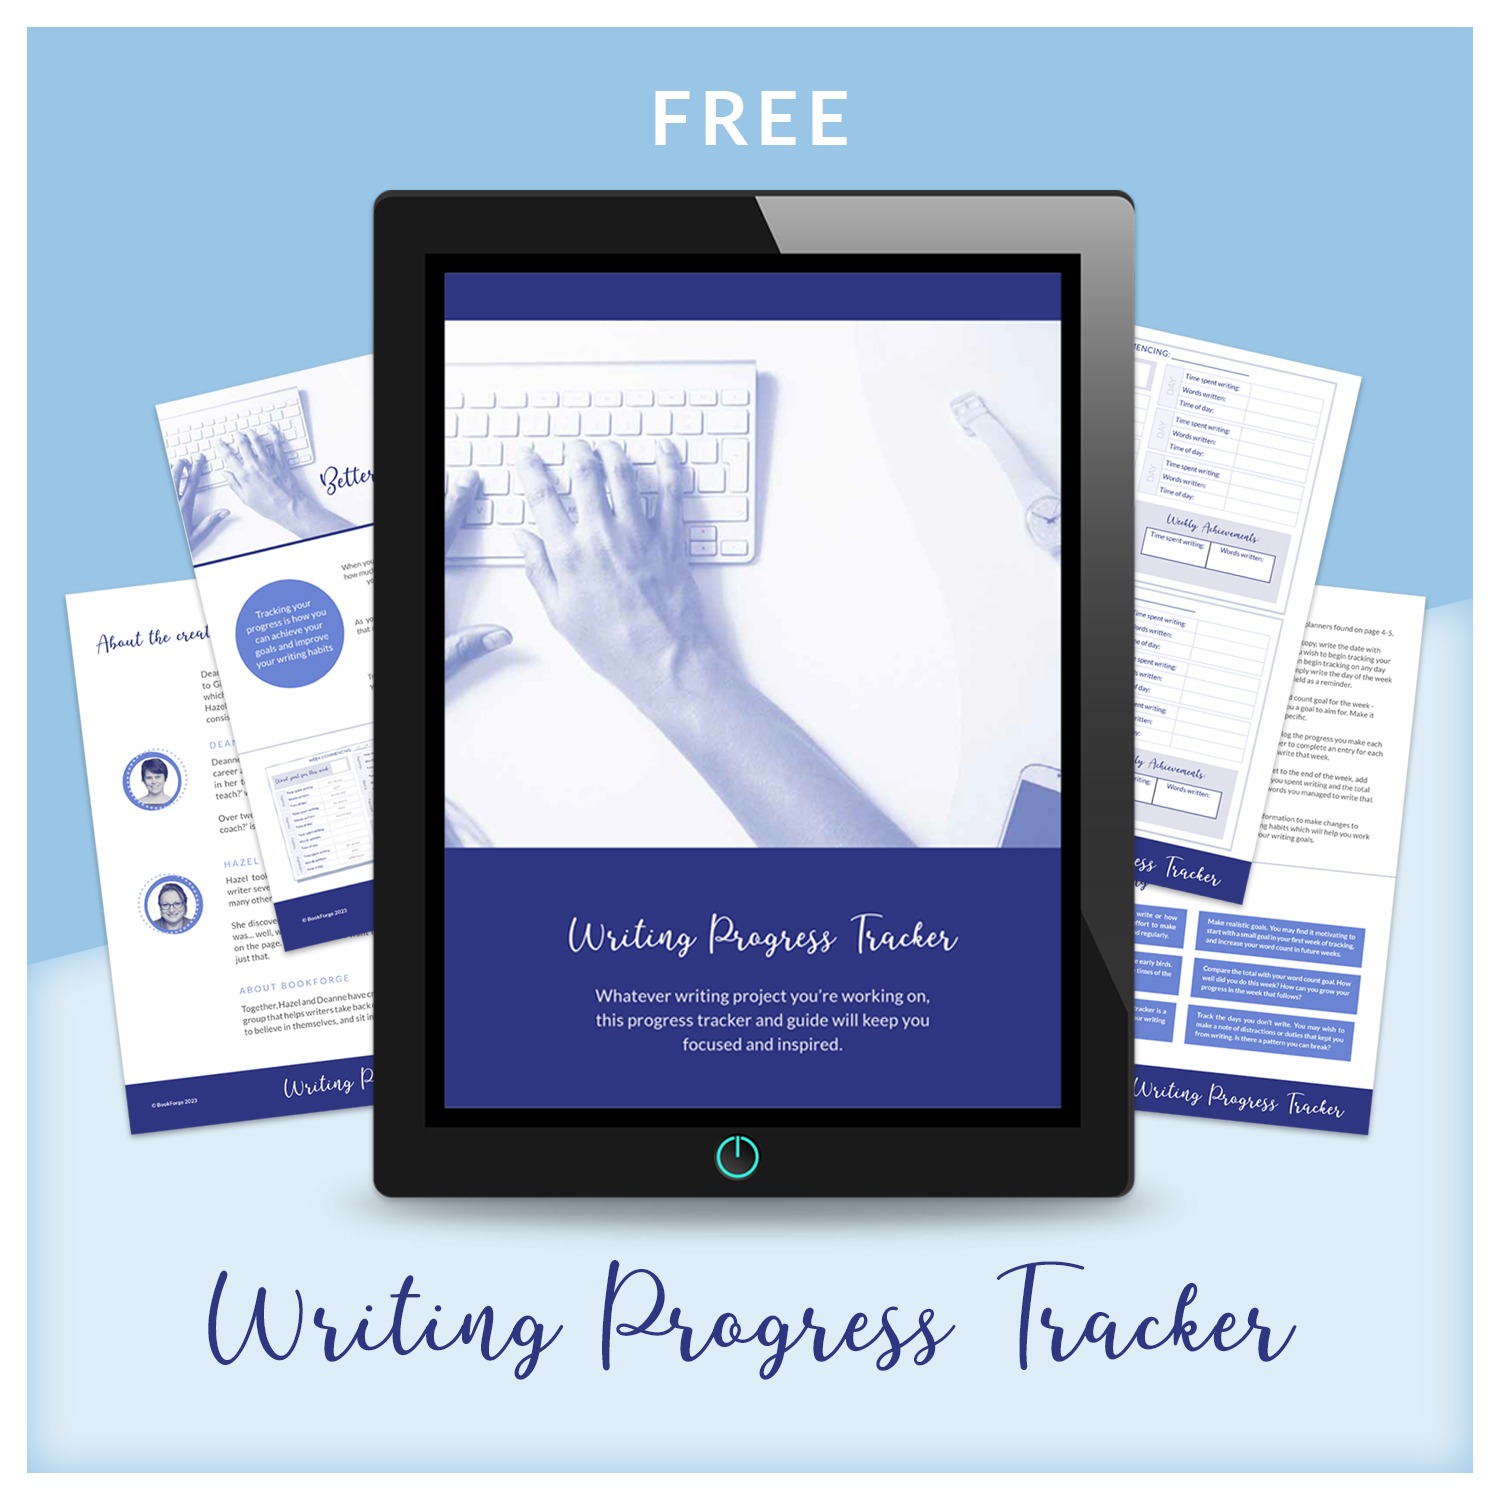 FREE progress tracker for Writers